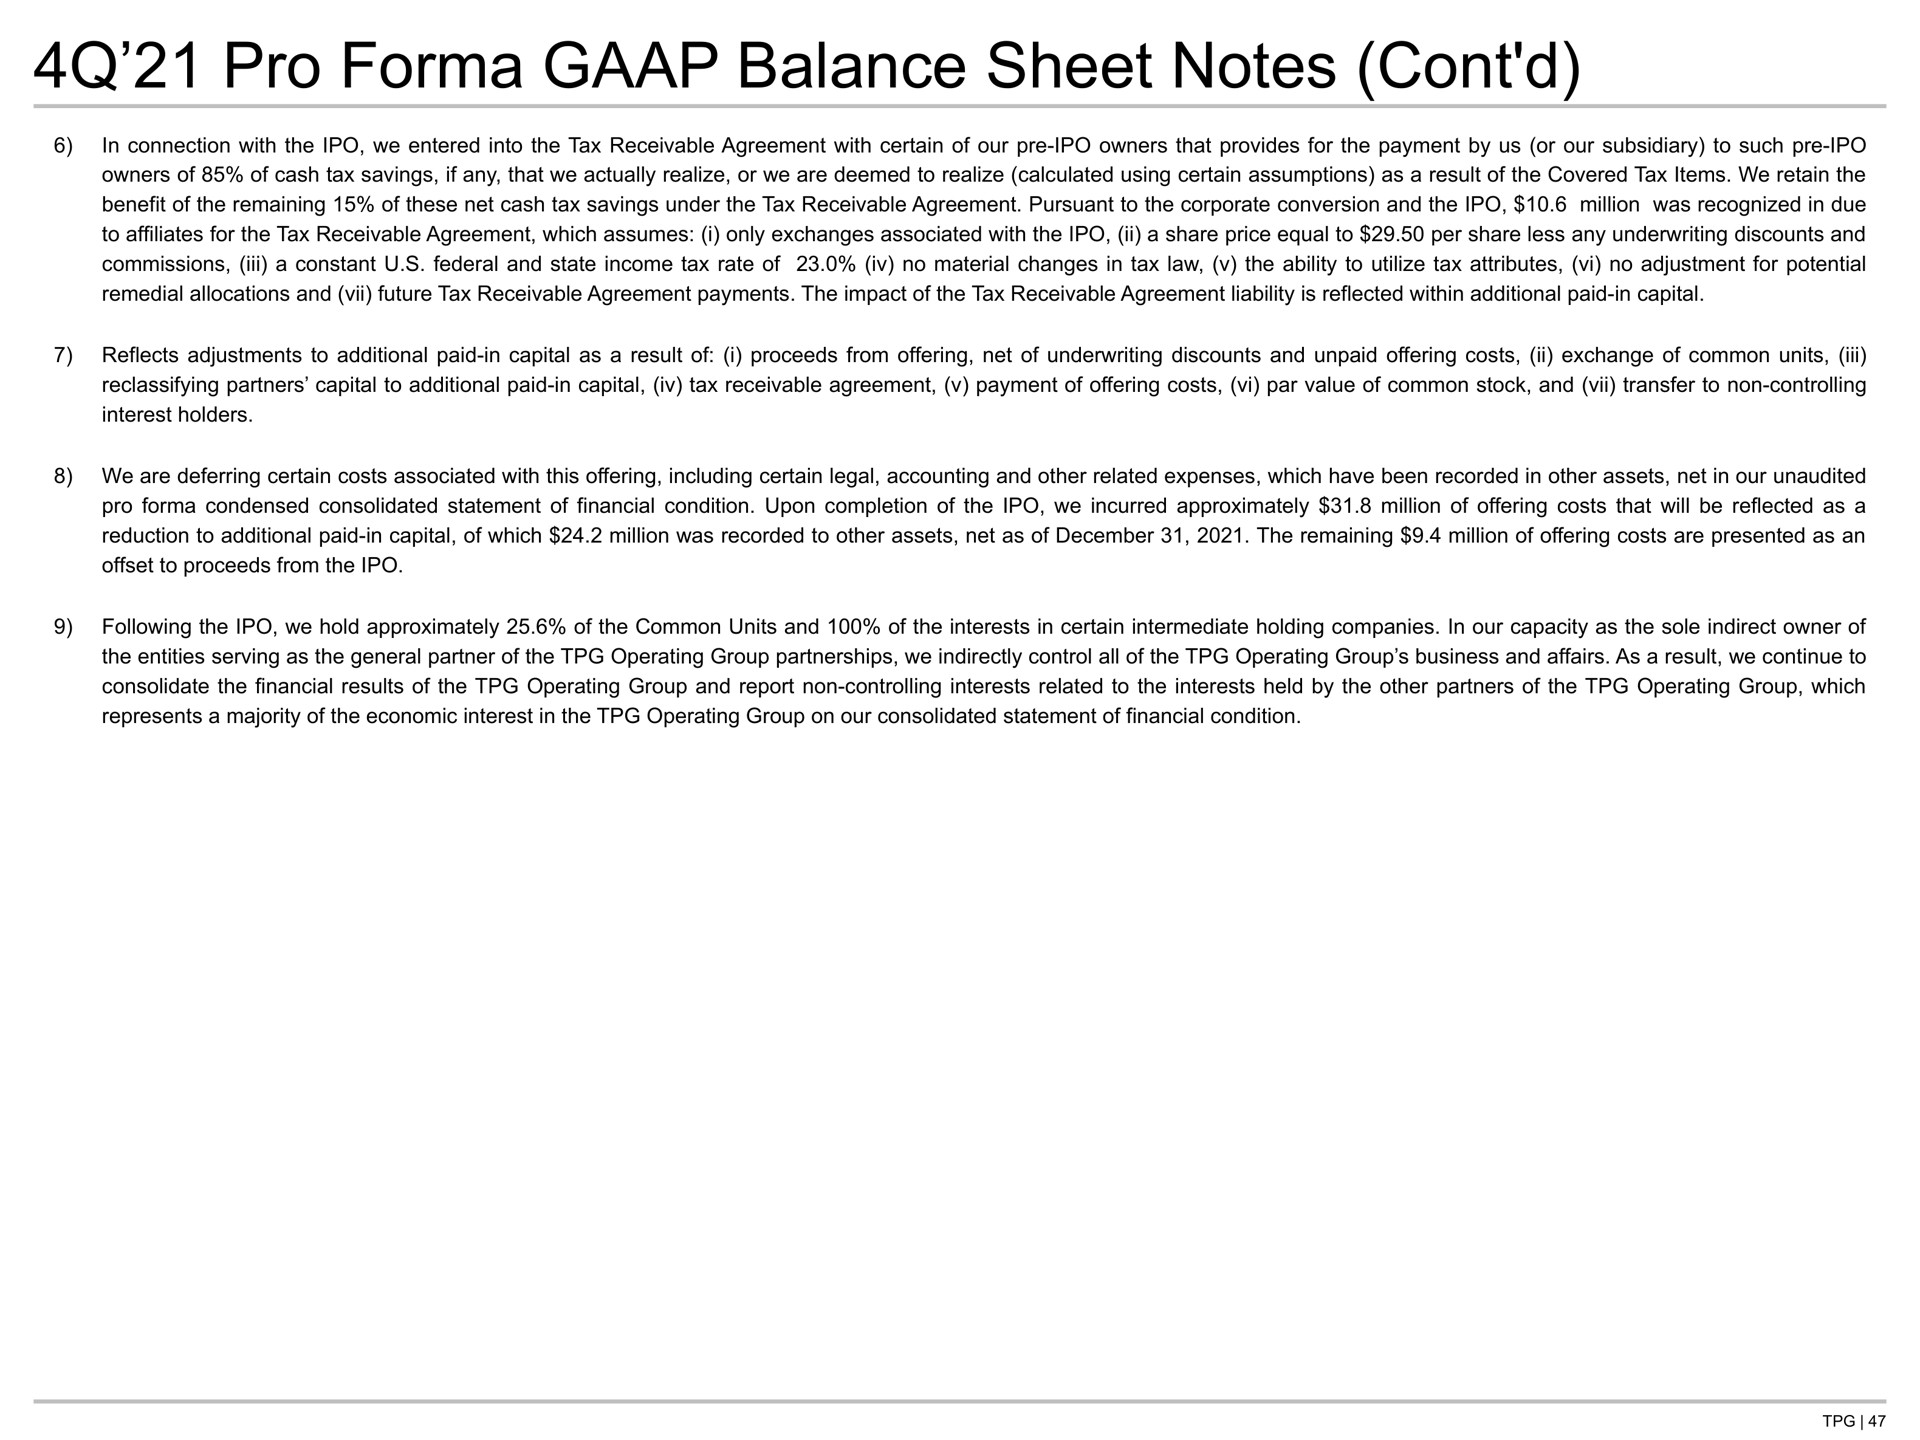 pro balance sheet notes | TPG